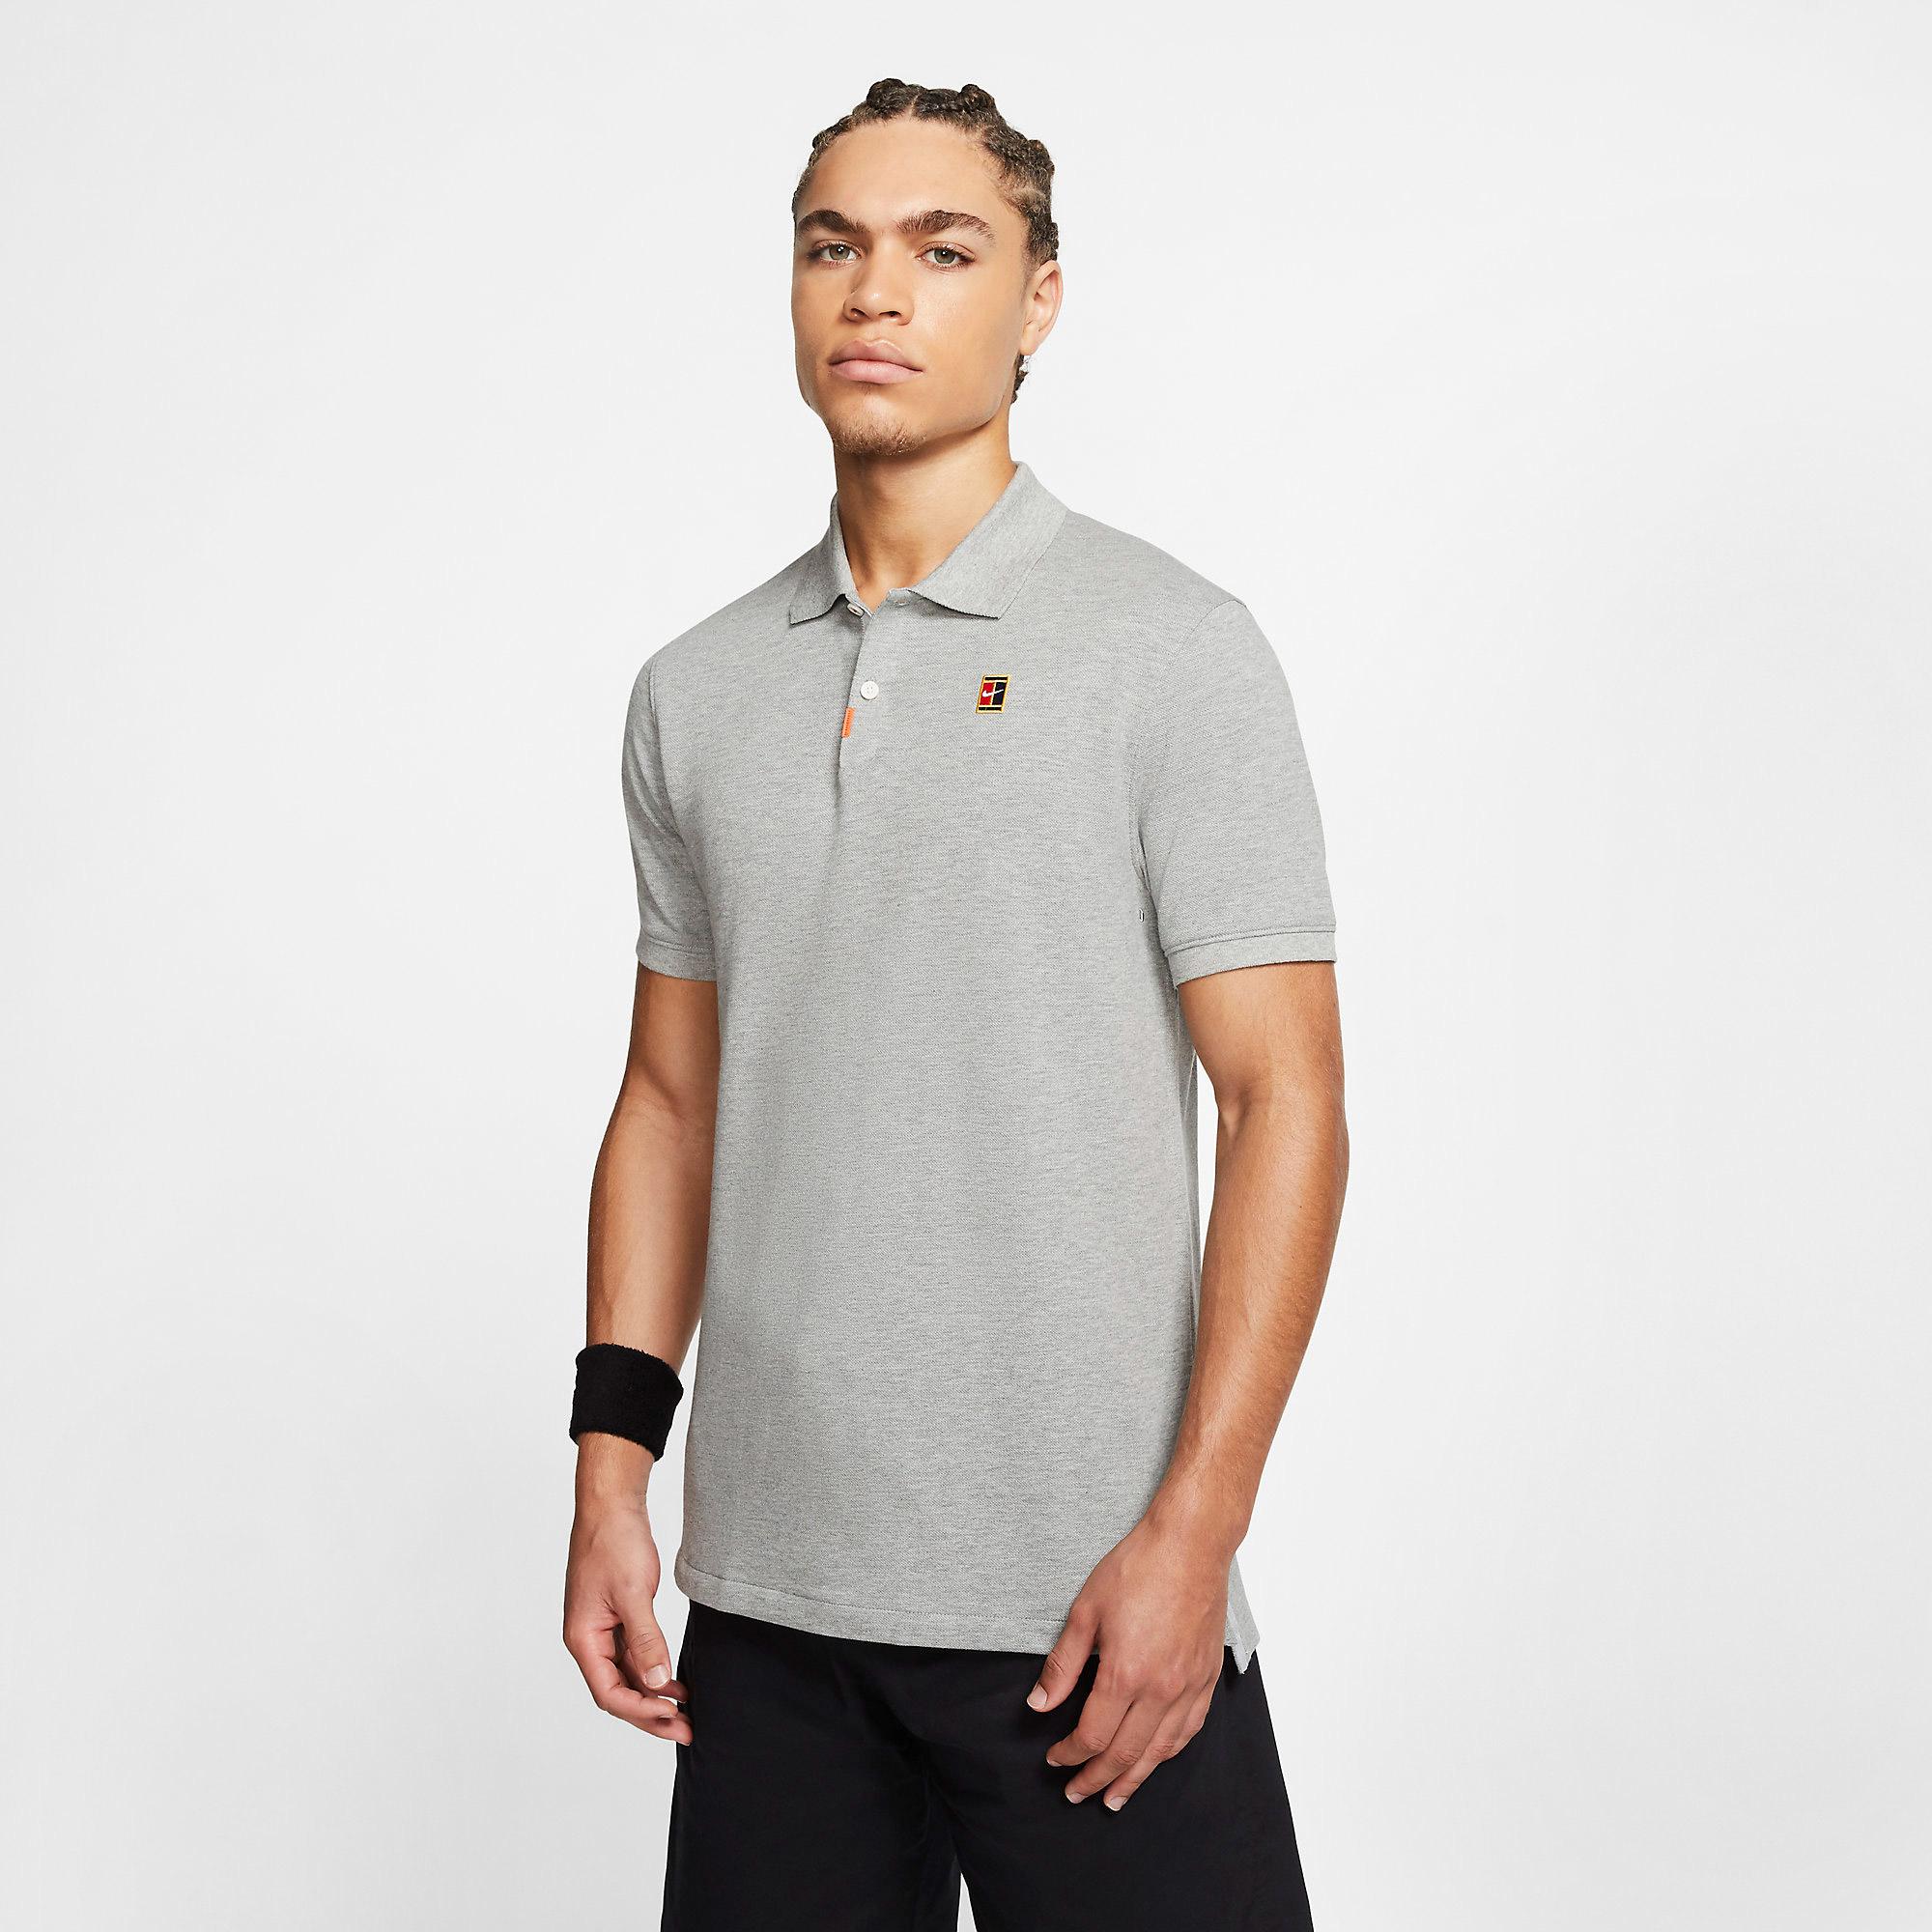 Nike Mens Slim Fit Polo - Dark Grey - Tennisnuts.com